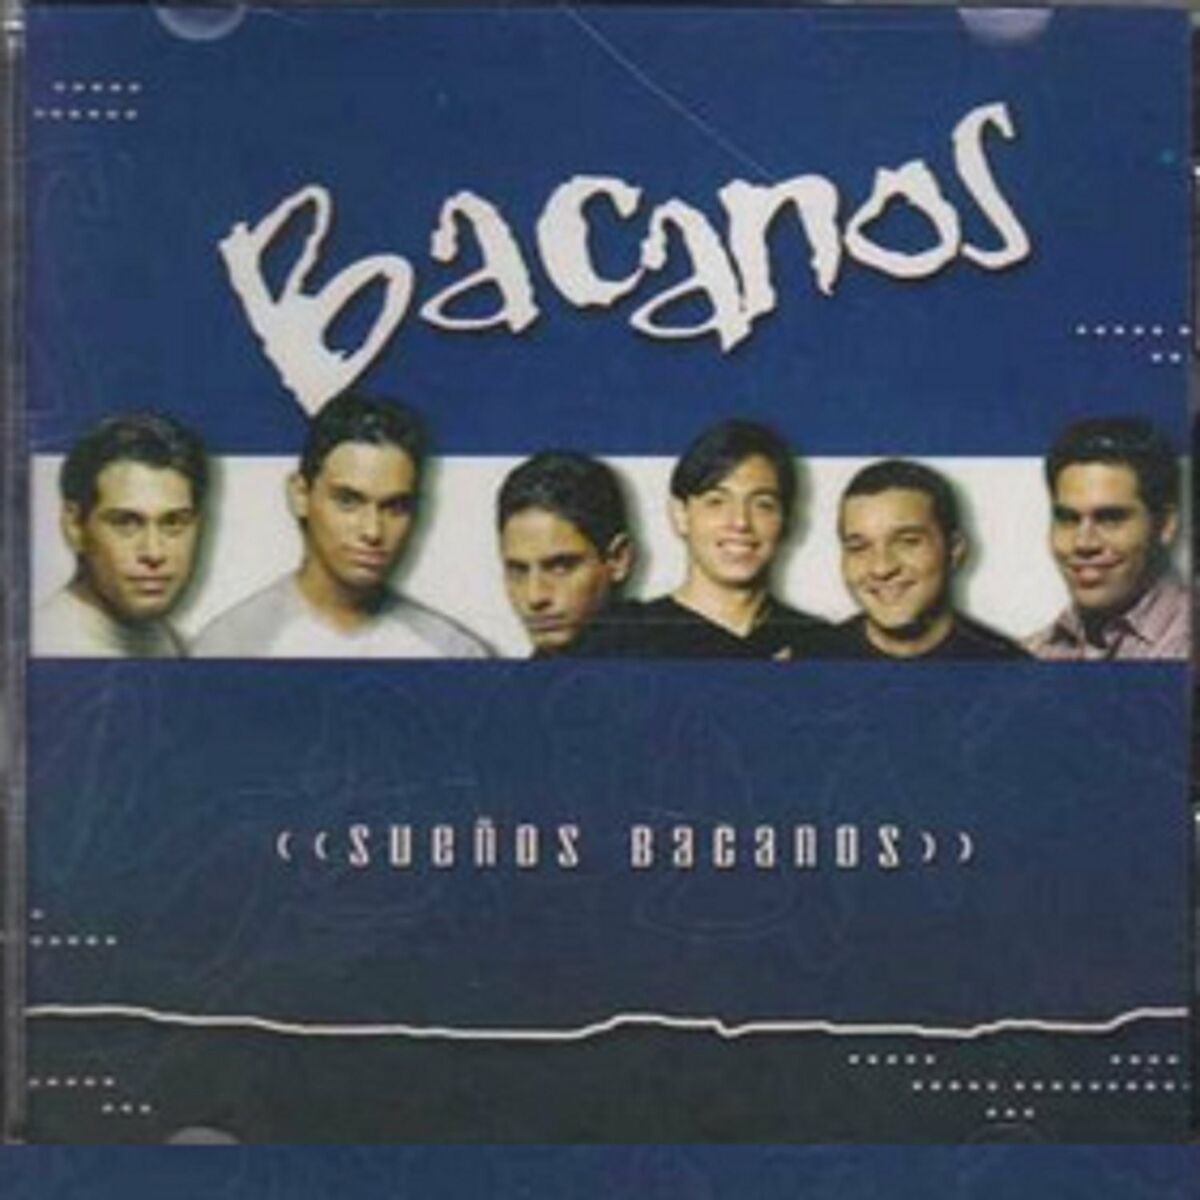 Bacanos: albums, songs, playlists | Listen on Deezer